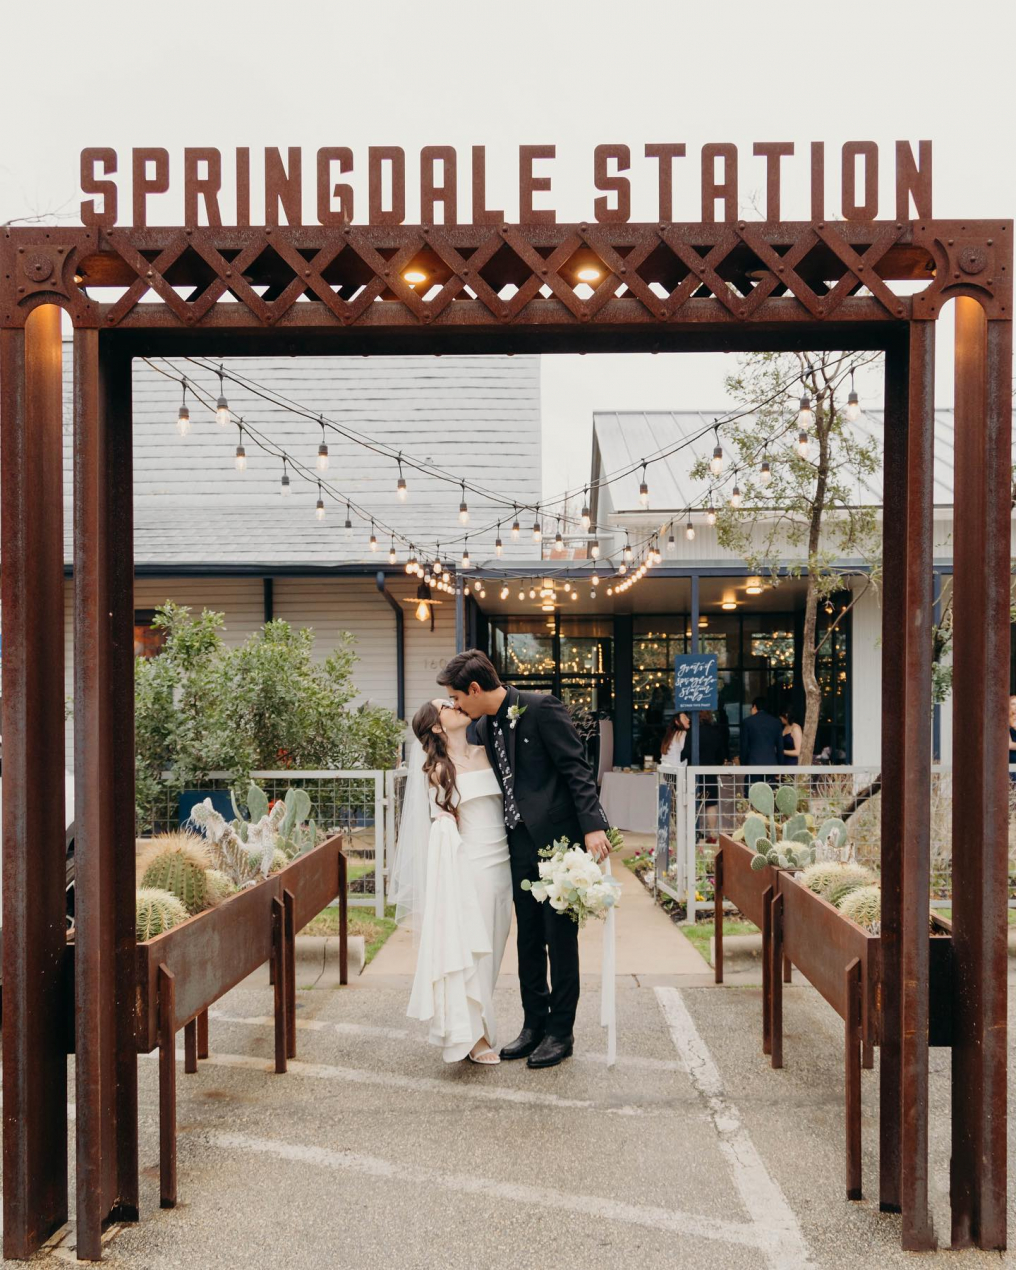 Springdale Station Venue photo